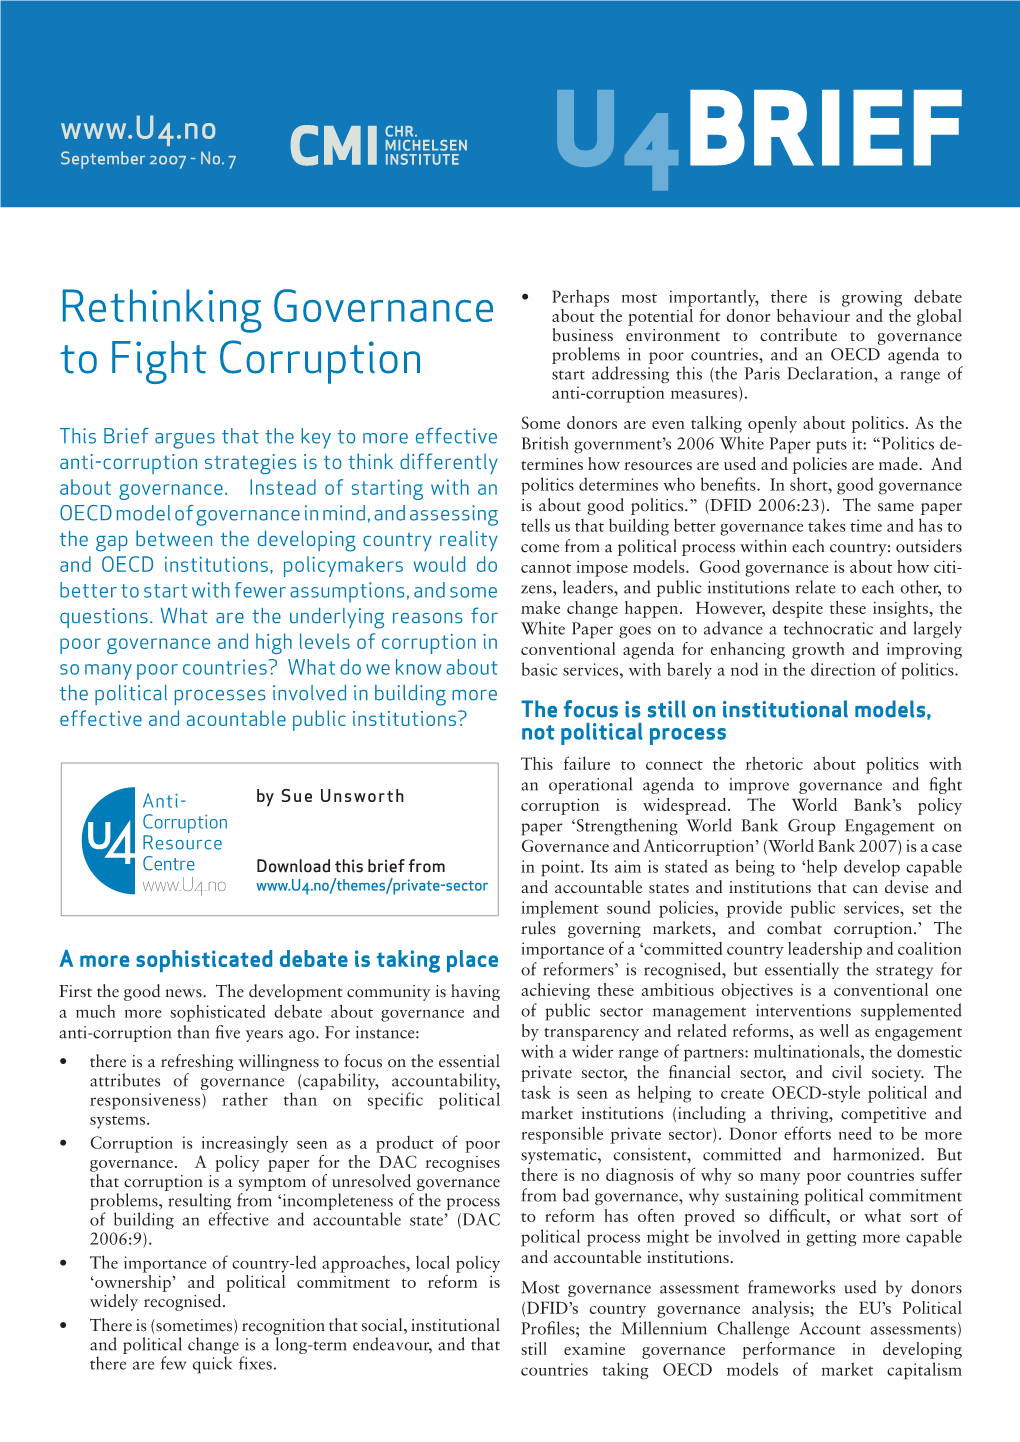 Rethinking Governance to Fight Corruption